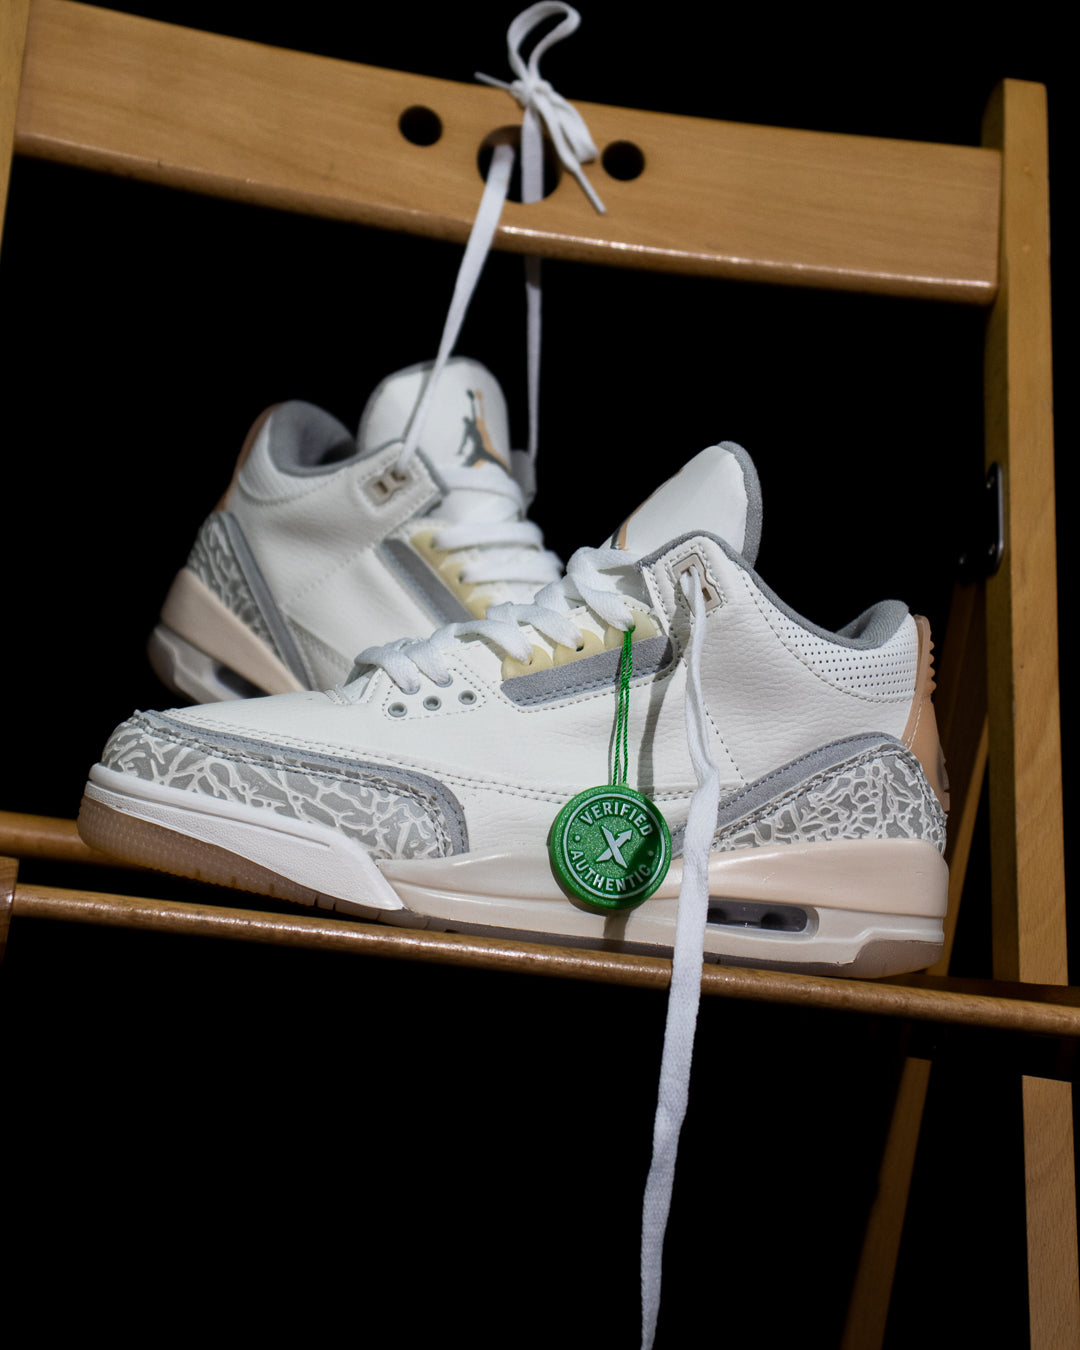 Nike Air Jordan 3 craft “ivory”